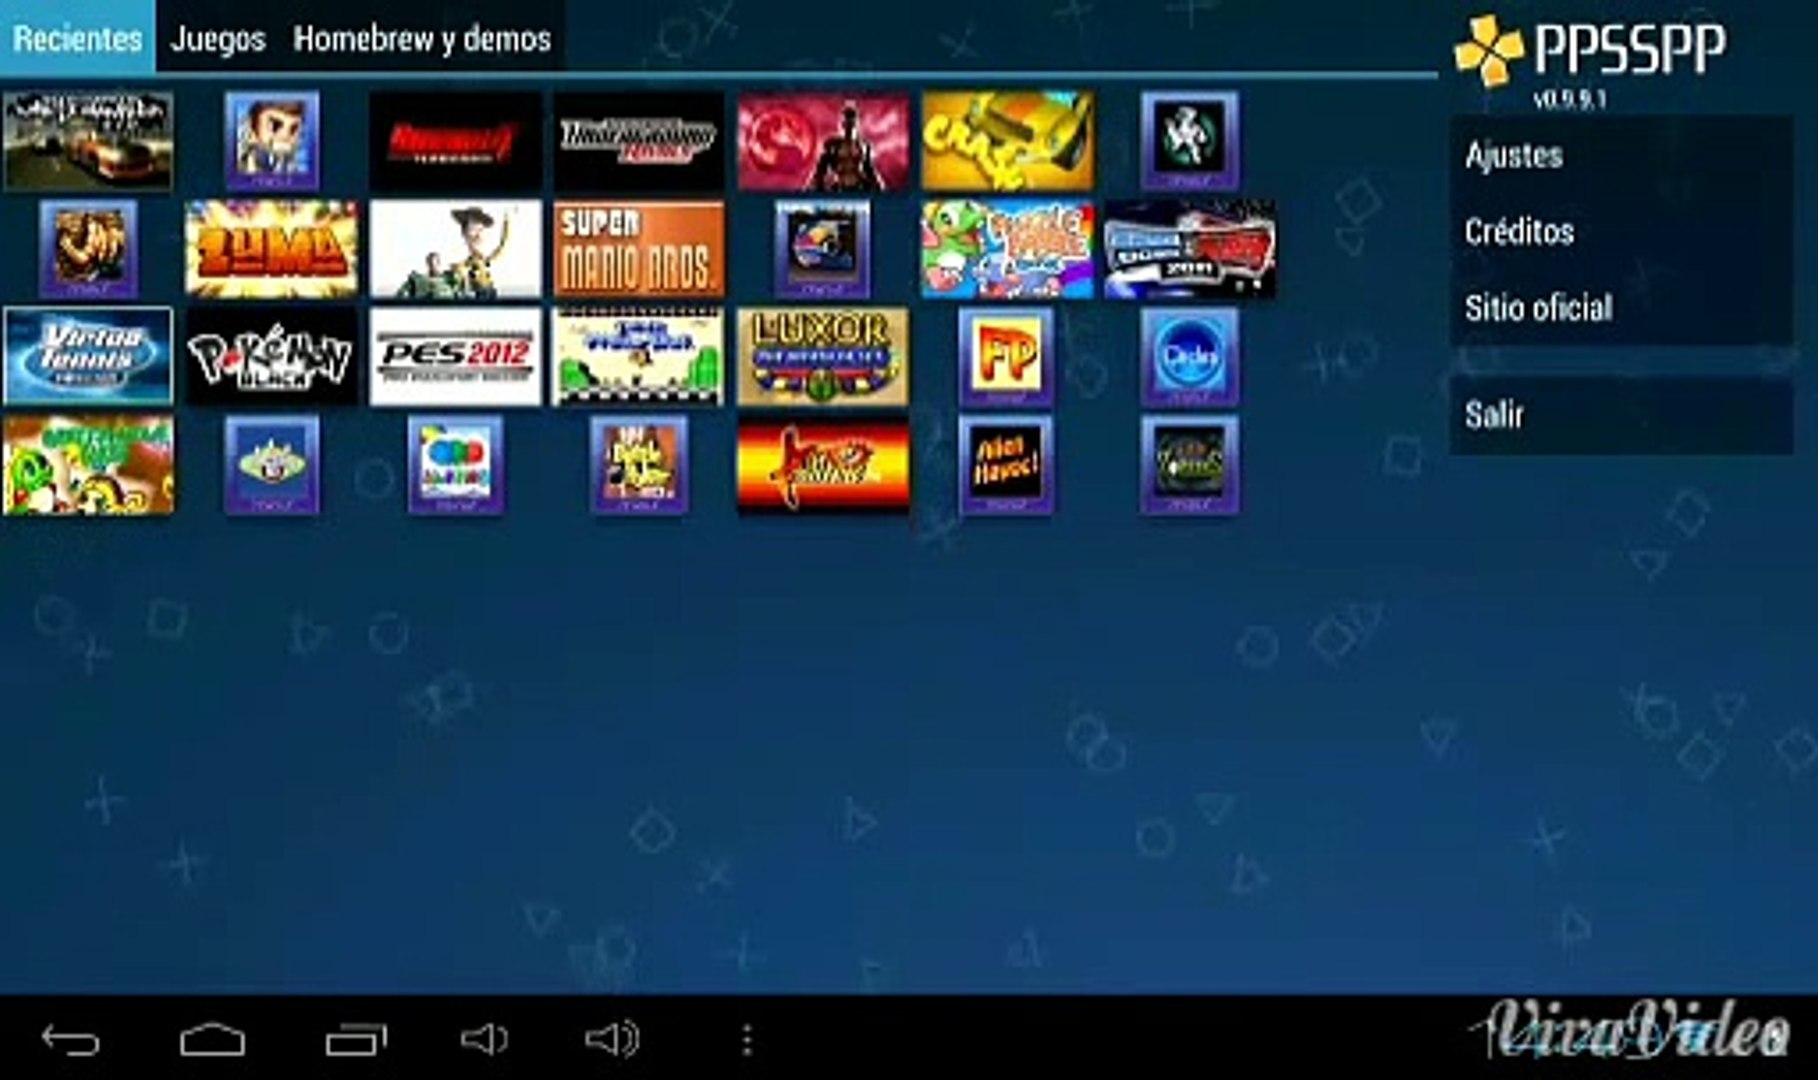 juegos compatibles y poco peso ppsspp android 2015 - video Dailymotion